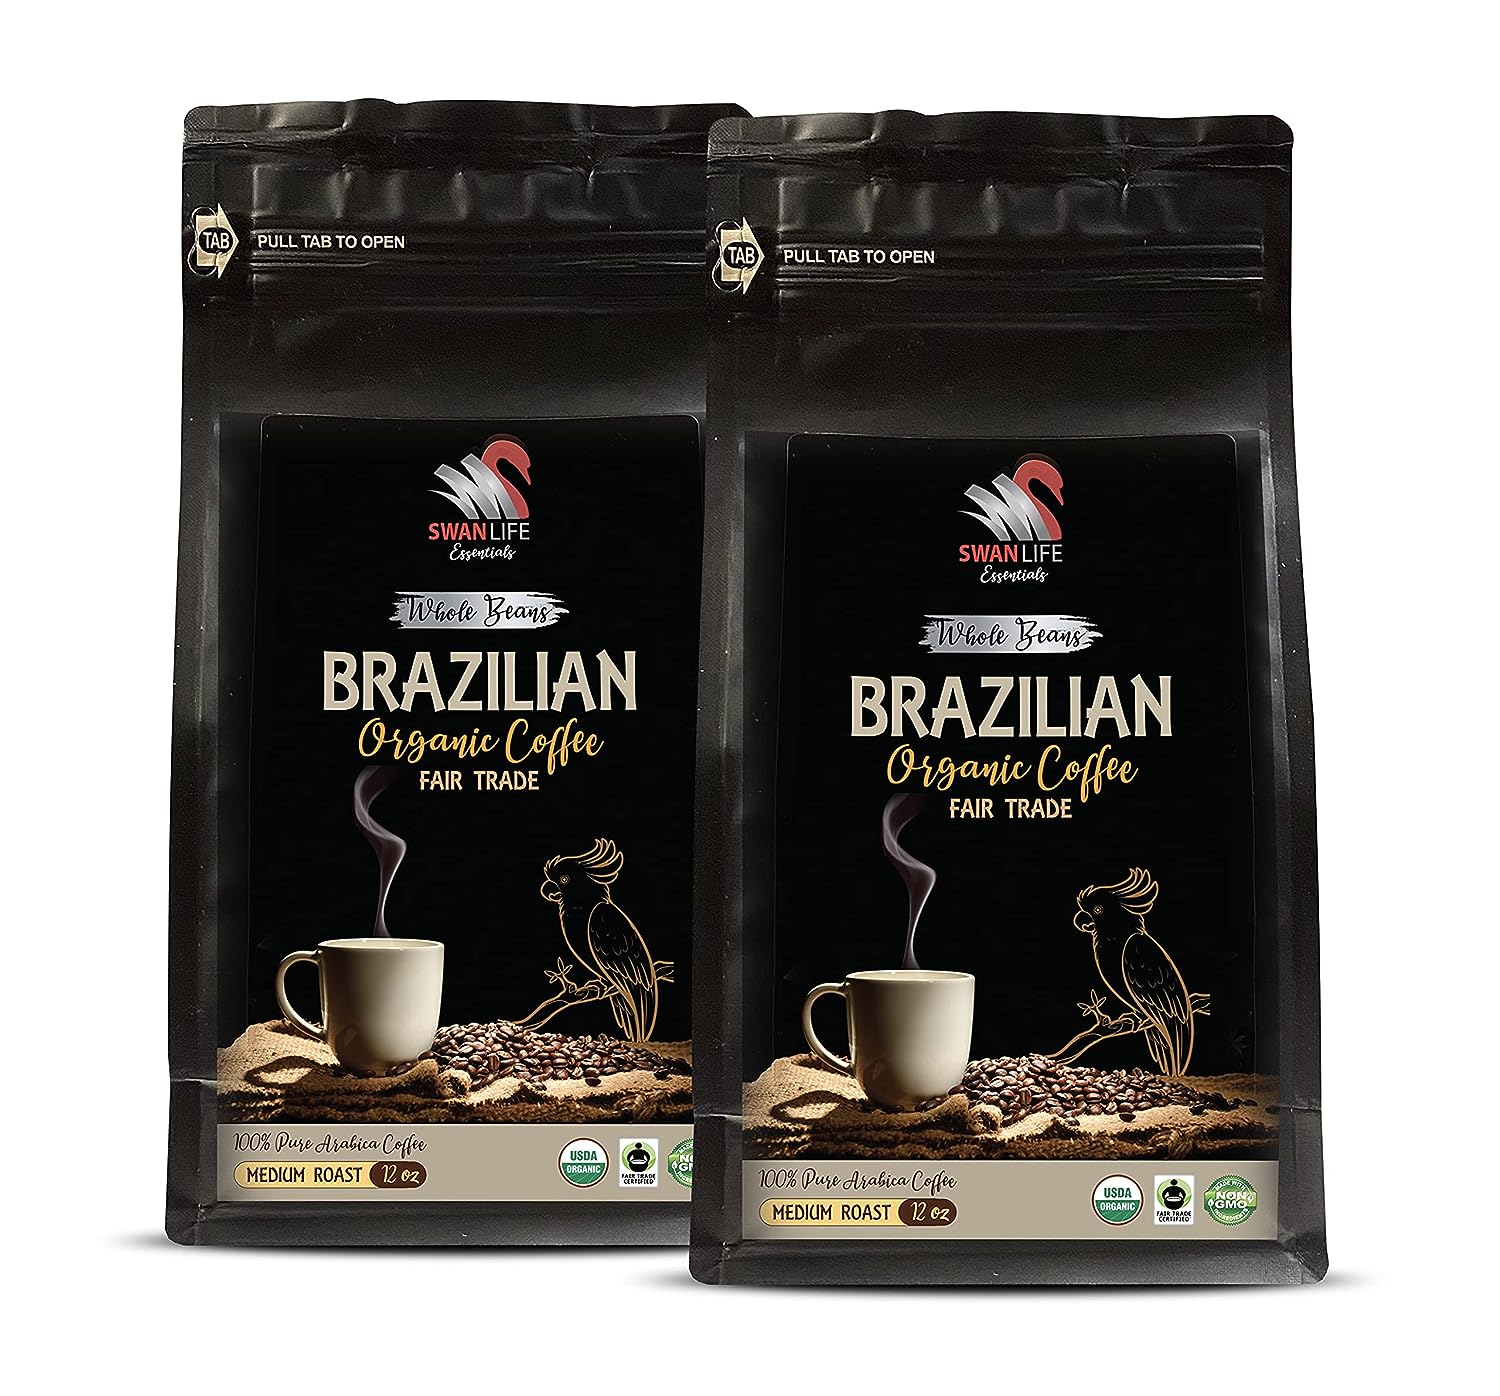 whole beans coffee gift set - BRAZILIAN WHOLE BEANS COFFEE ORGANIC, Medium Roast, non gmo, 100% Arabica, Fair Trade, low acid, organic coffee beans, brazilian coffee ground dark roast 2 Bags